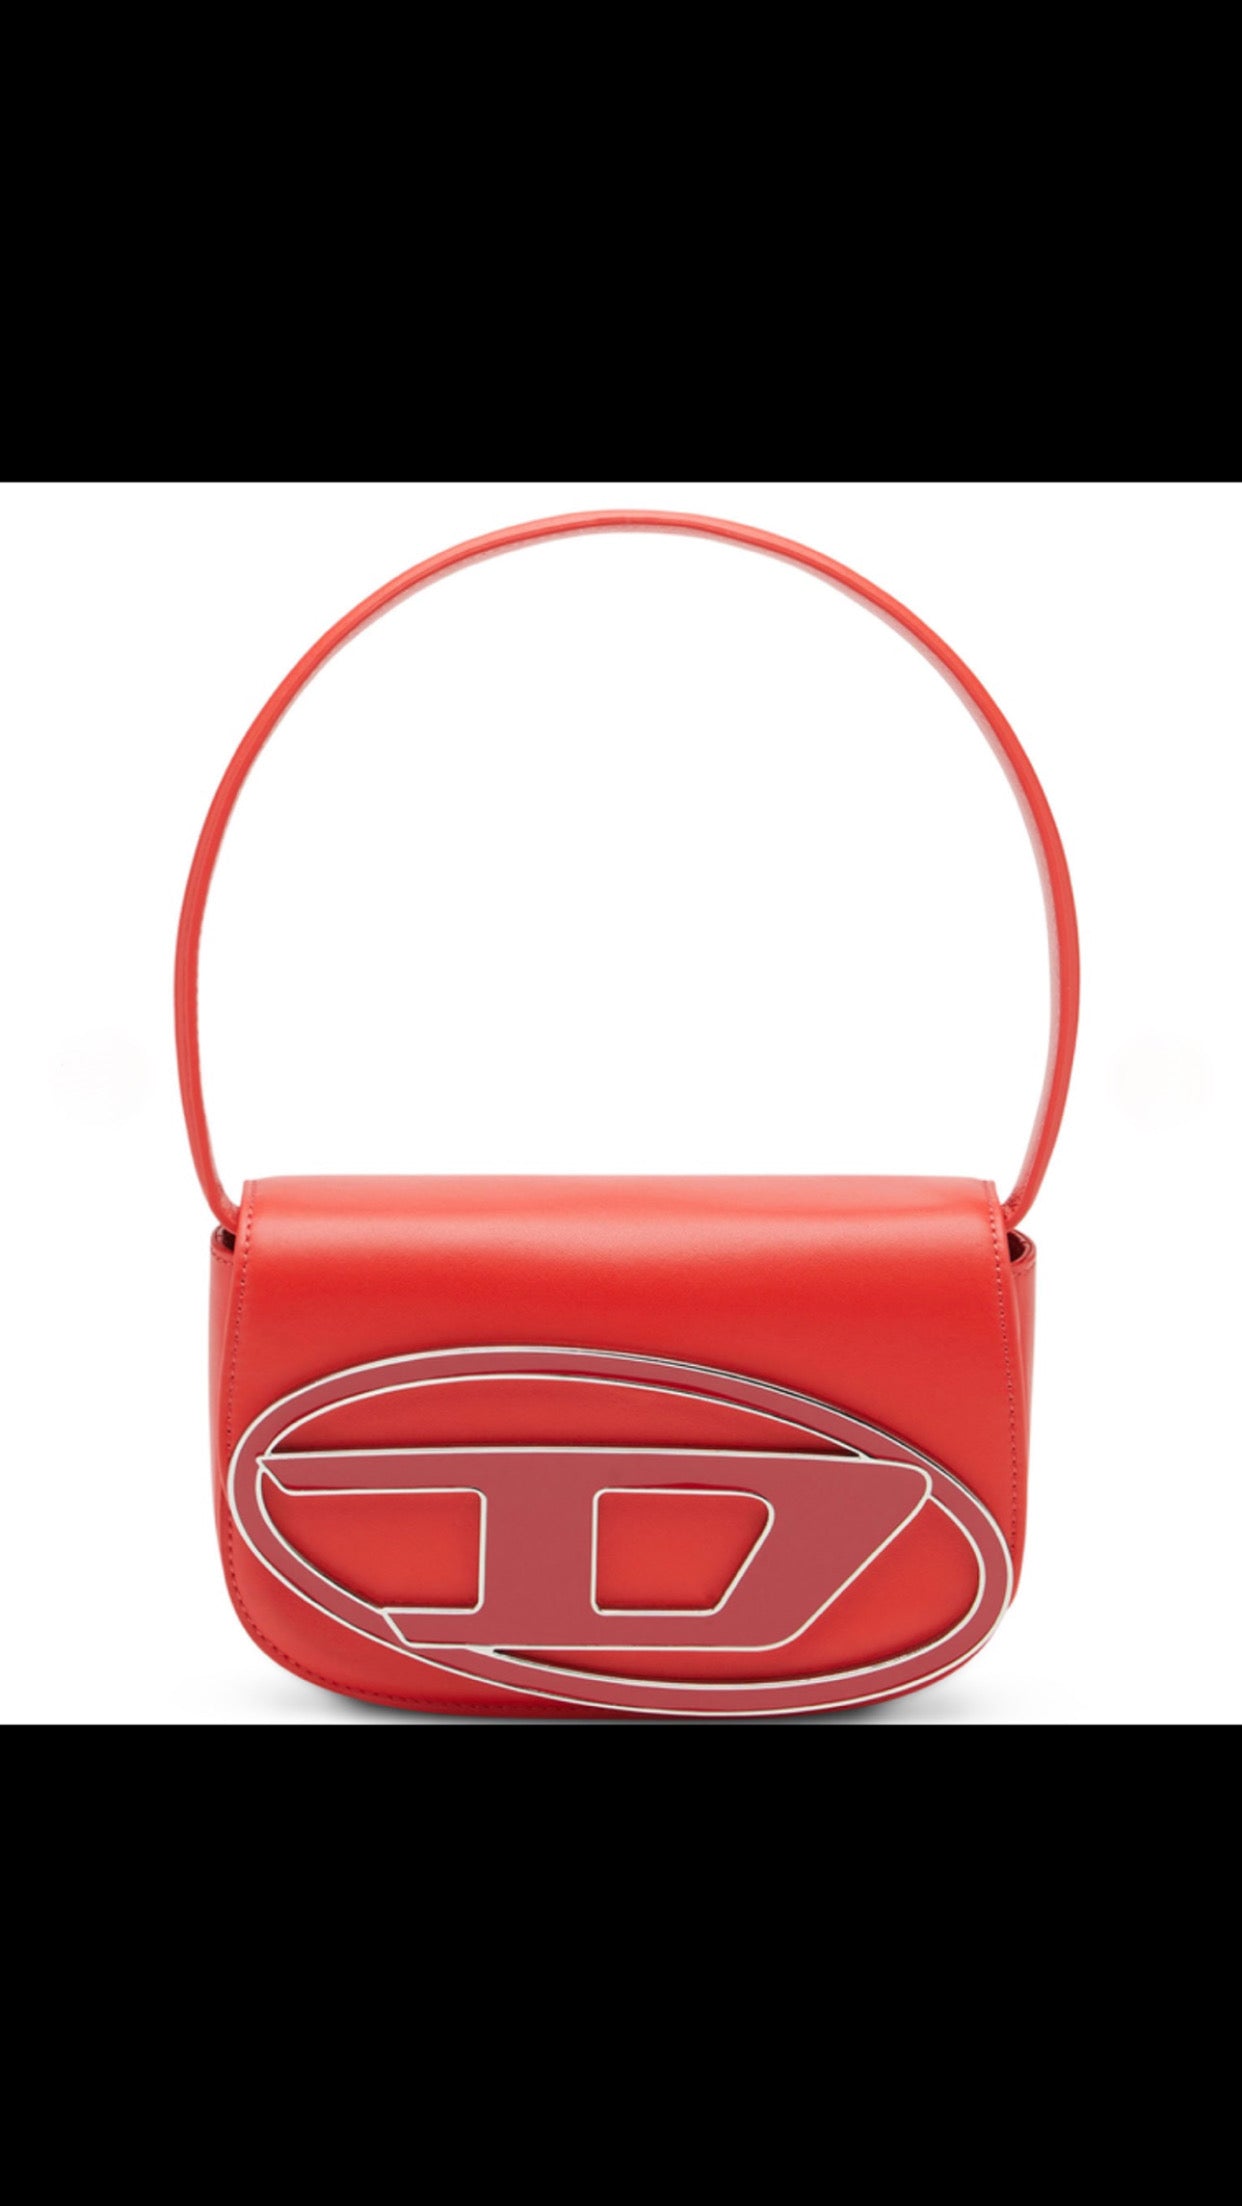 D Bag Red